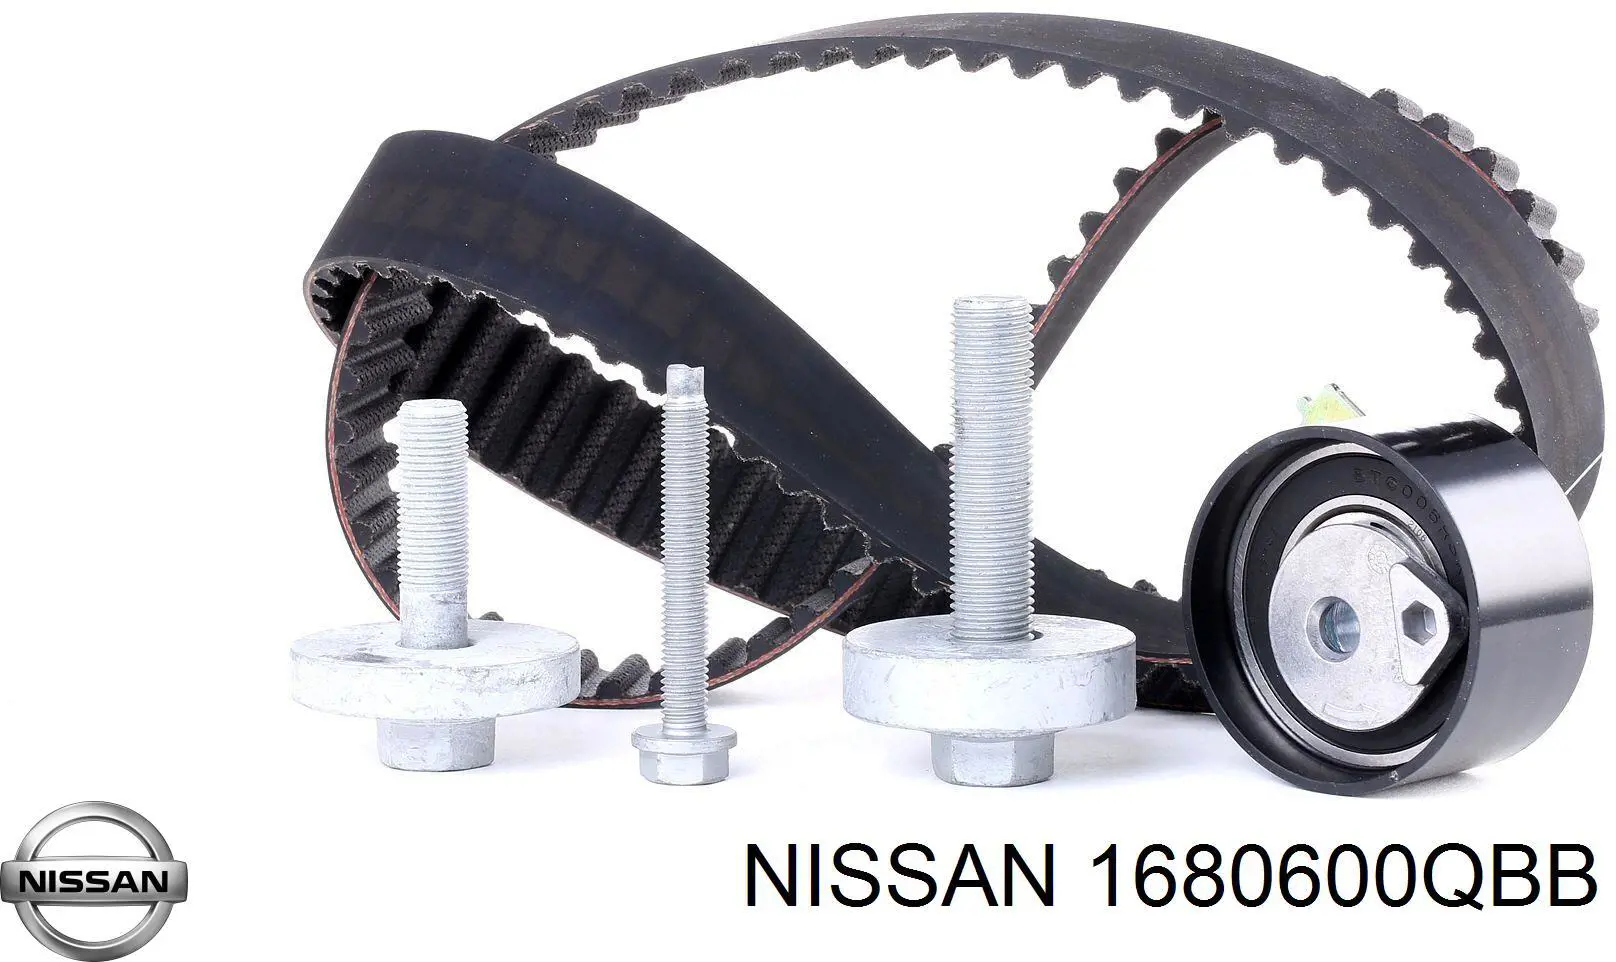 1680600QBB Nissan ролик грм